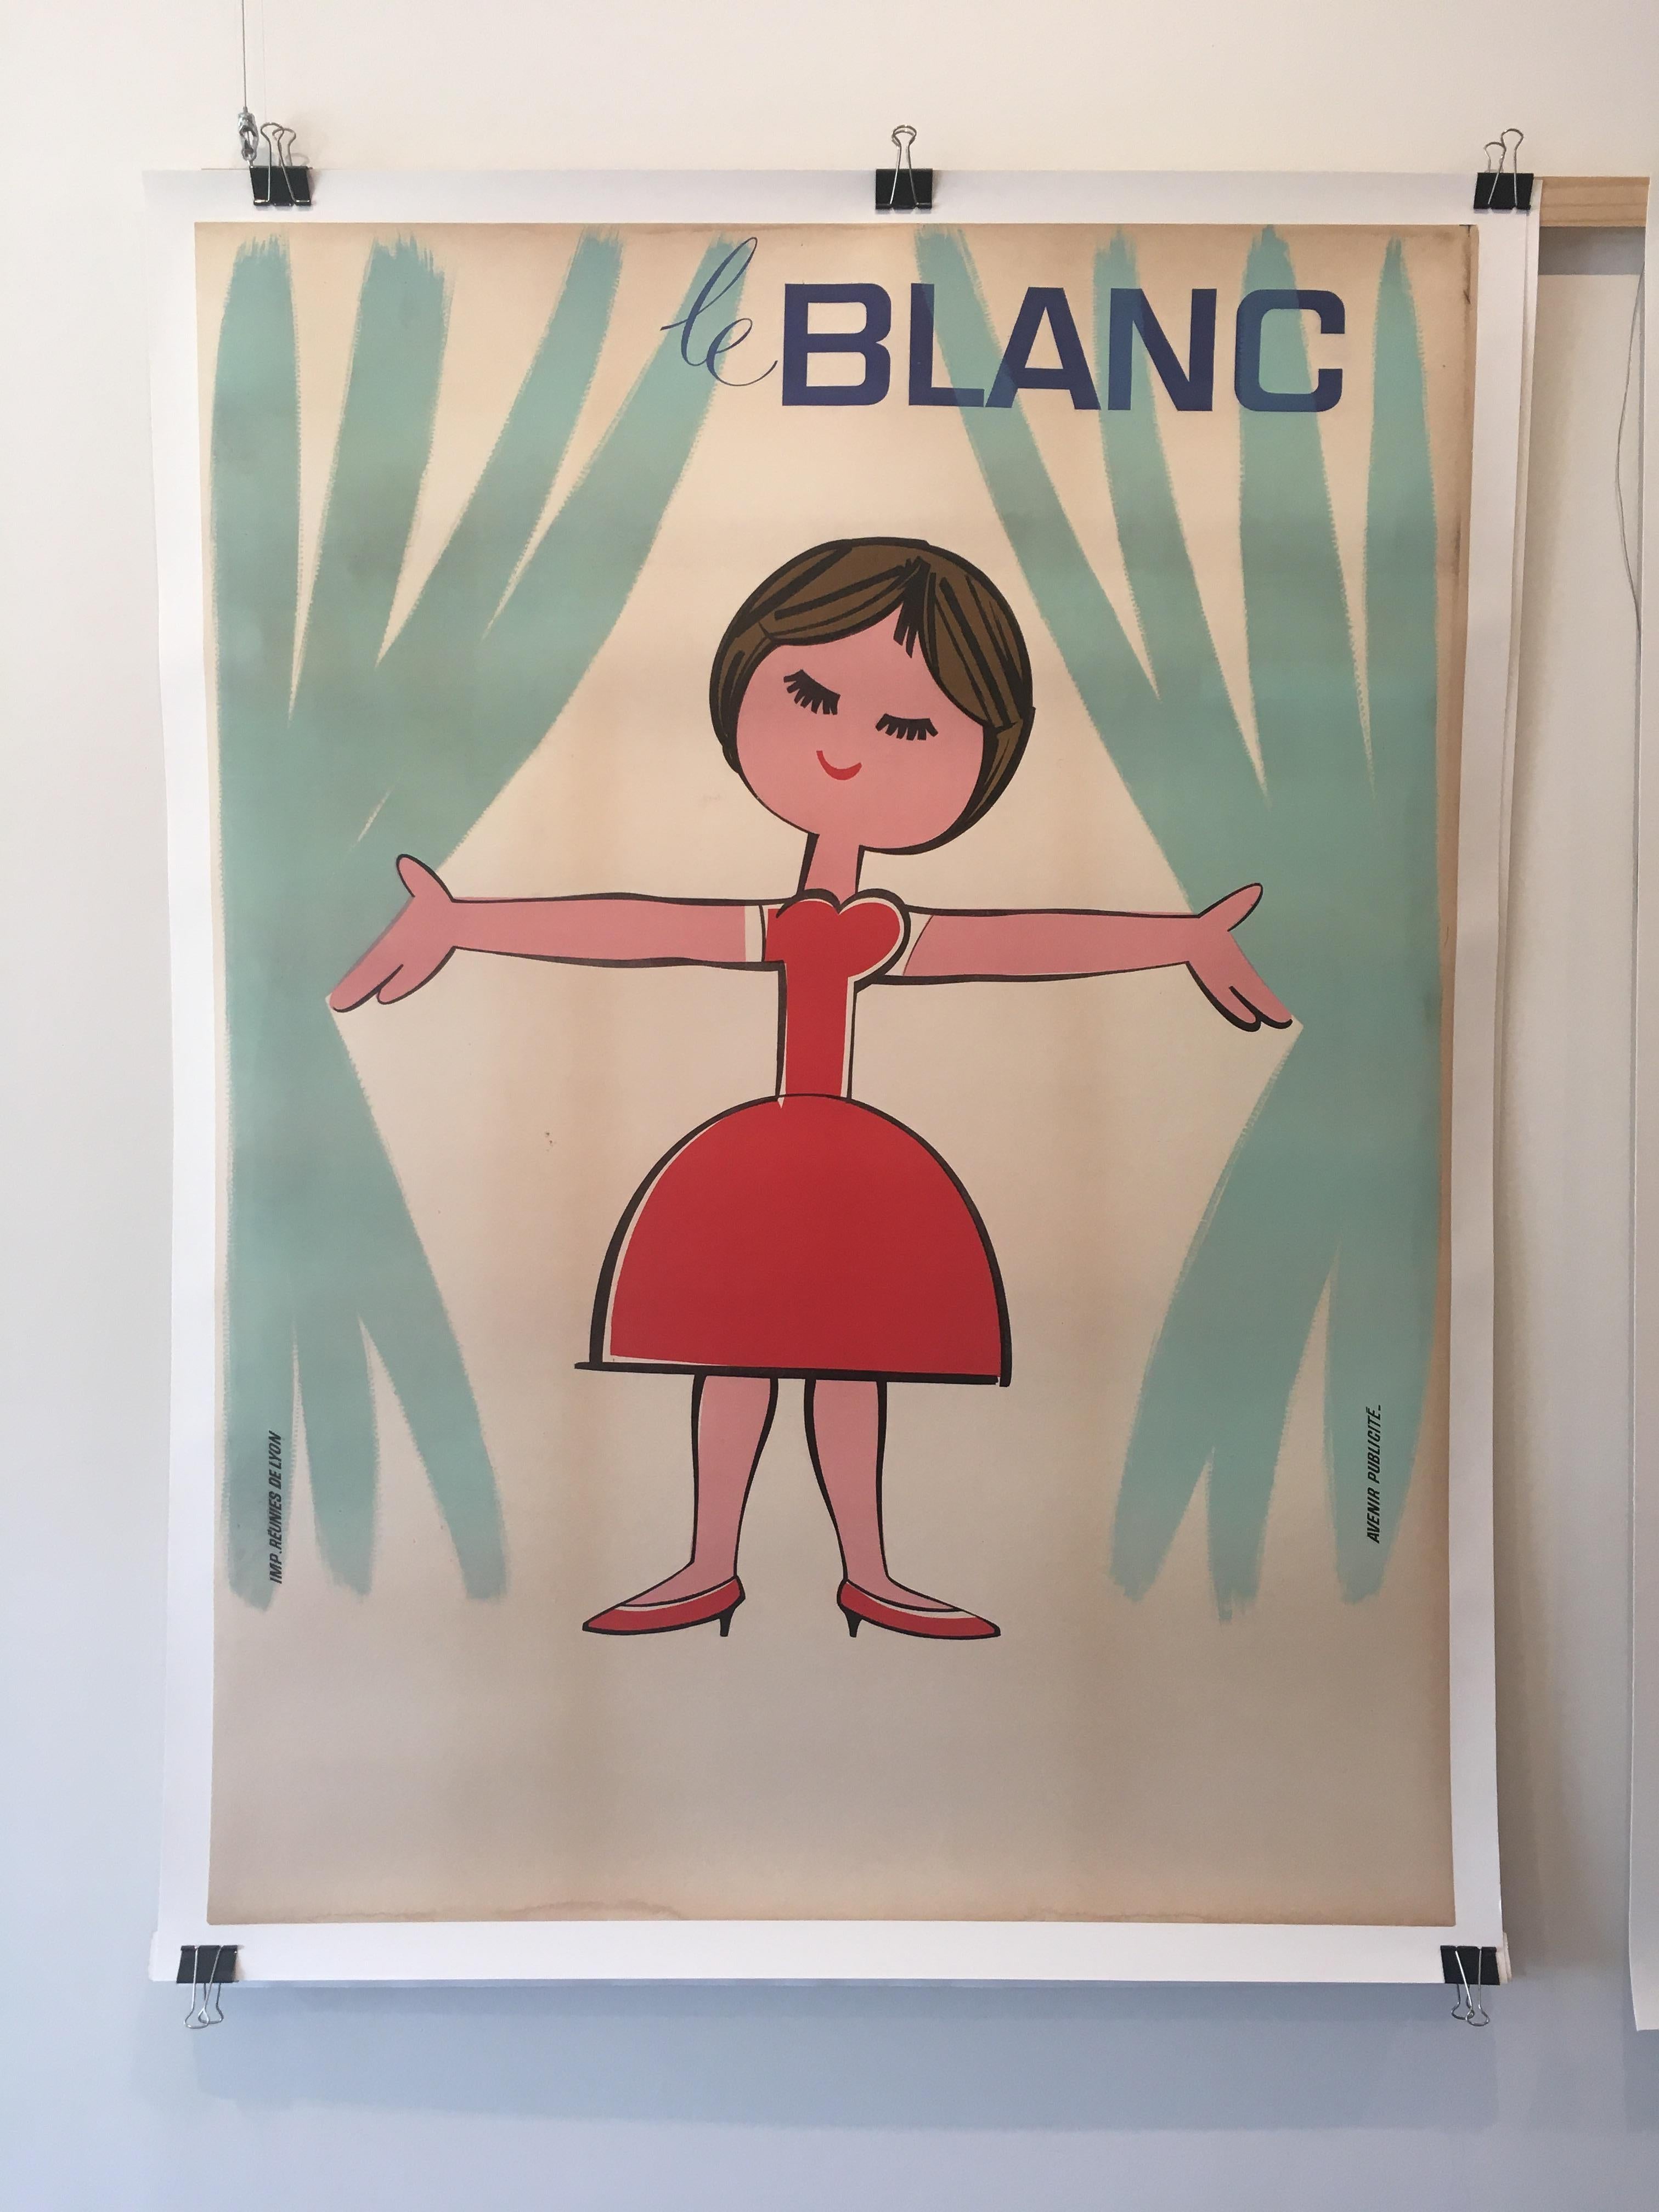 Original vintage French advertising poster, 'Le Blanc', 1950s.

This is an original vintage advertising poster for fresh white linen, ''Le Blanc